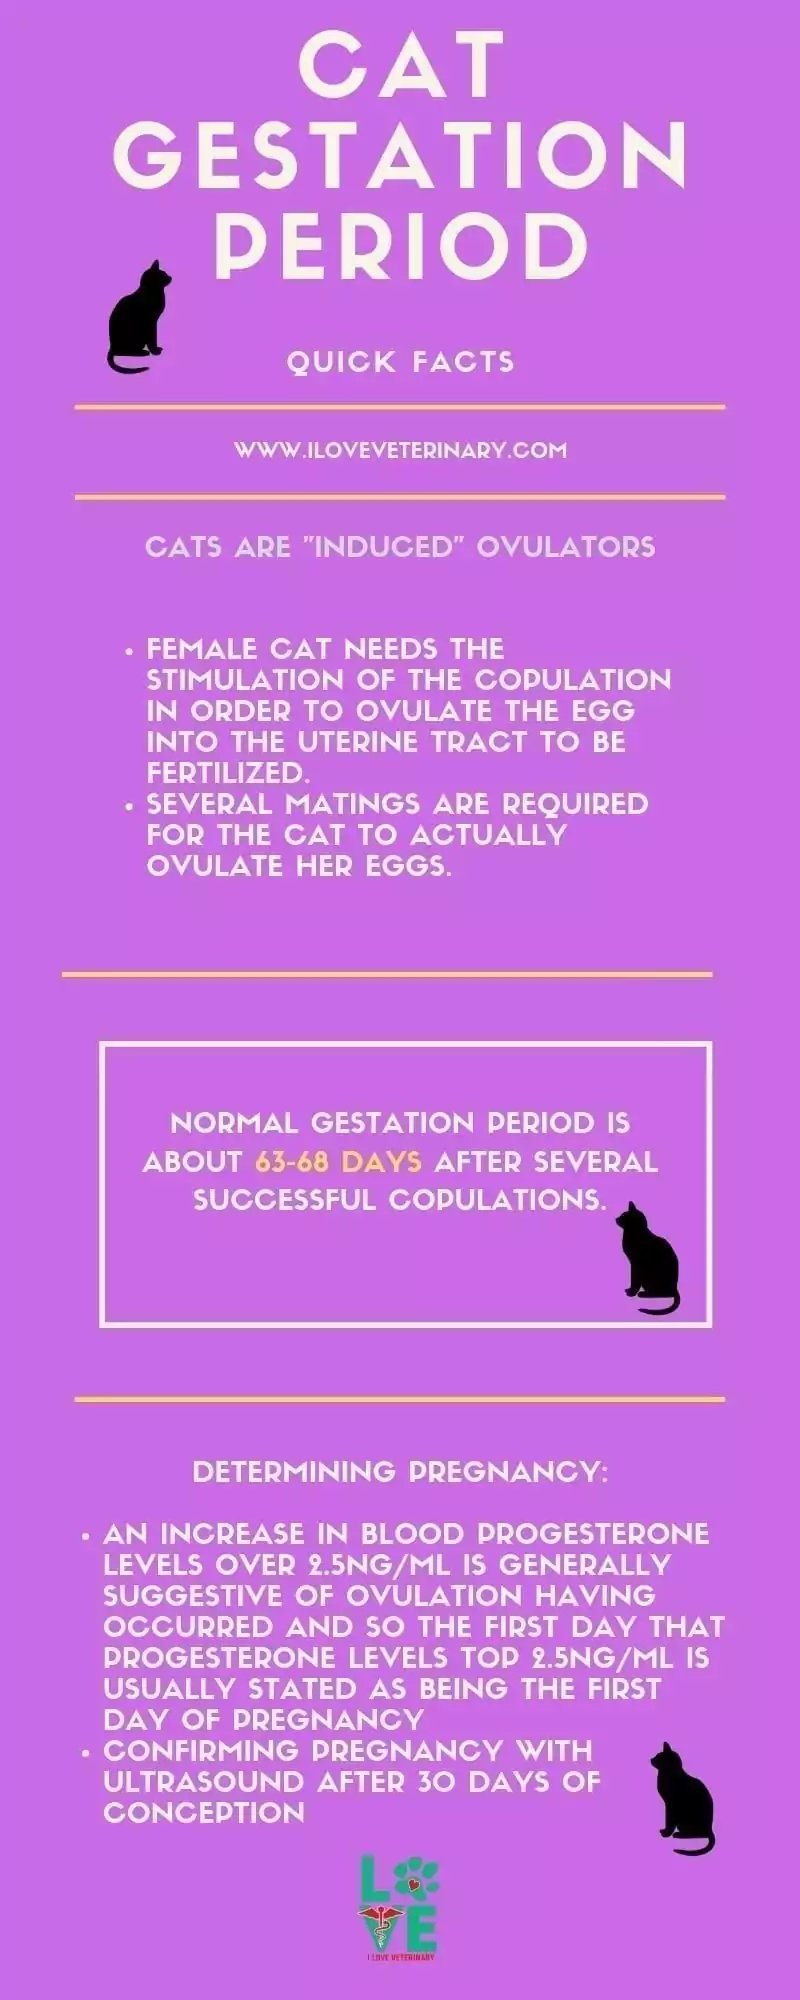 cat gestation period infographic 